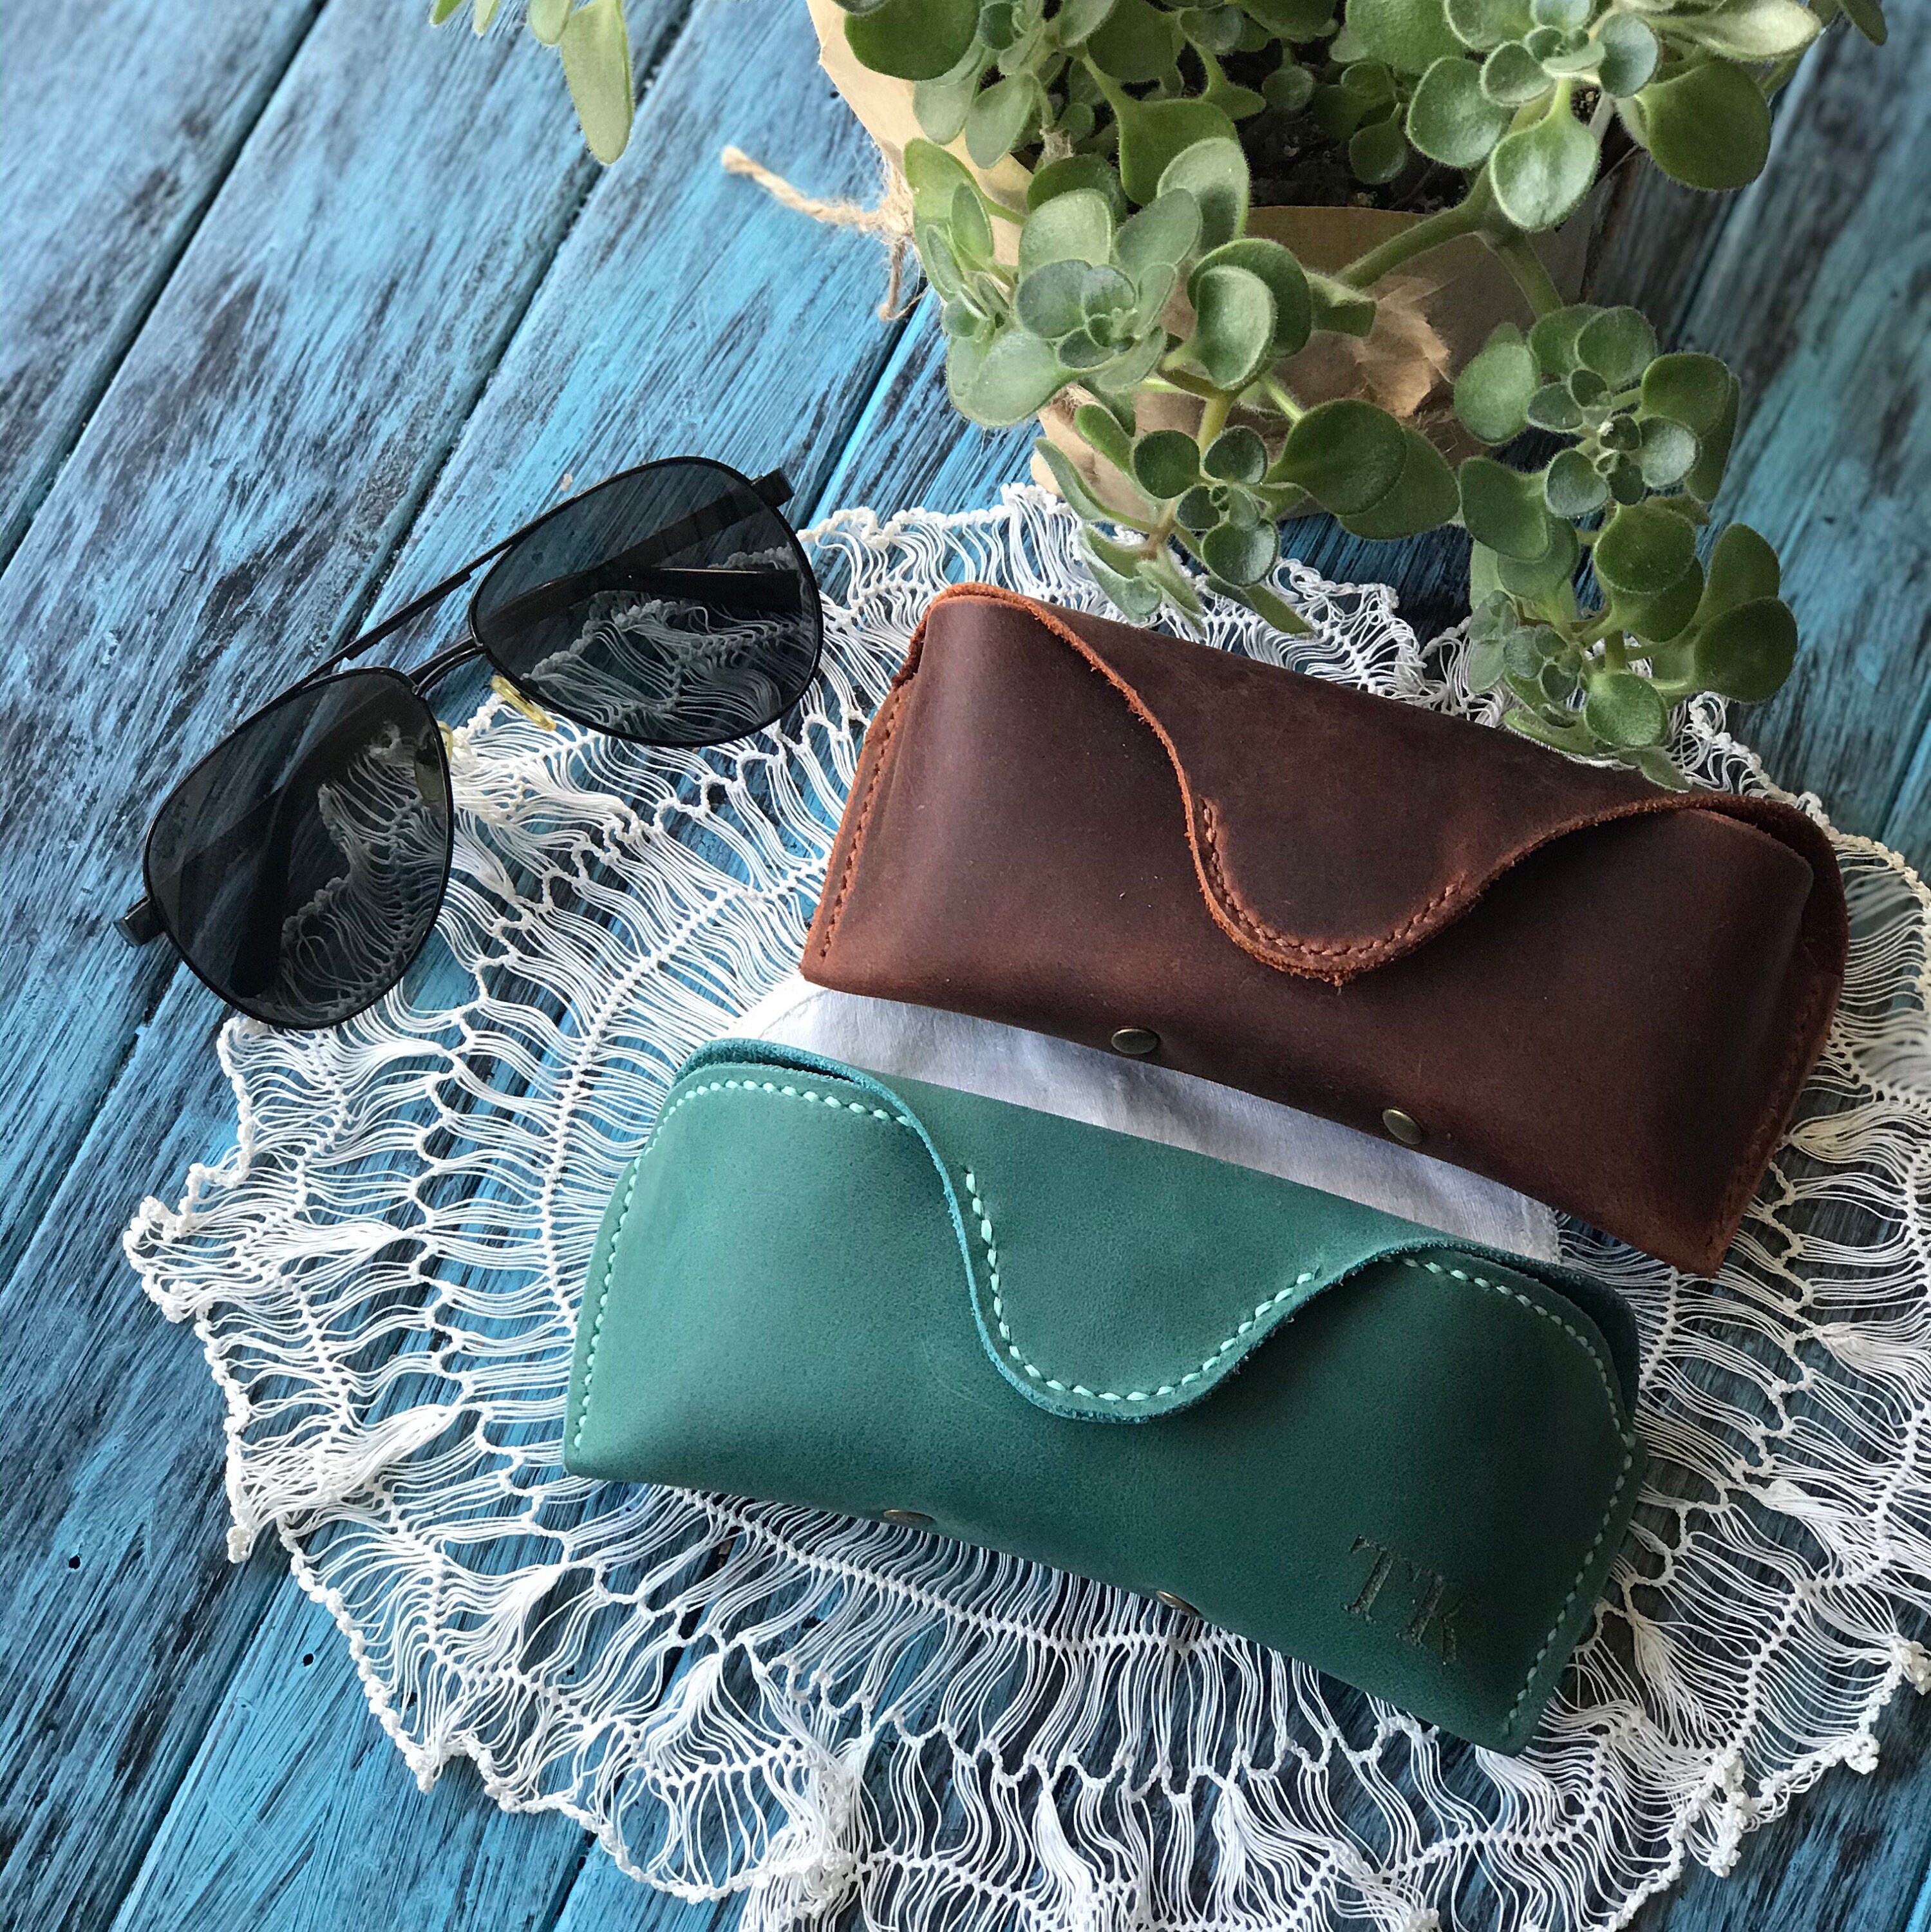 Portland Leather Sunglasses Case, Mint